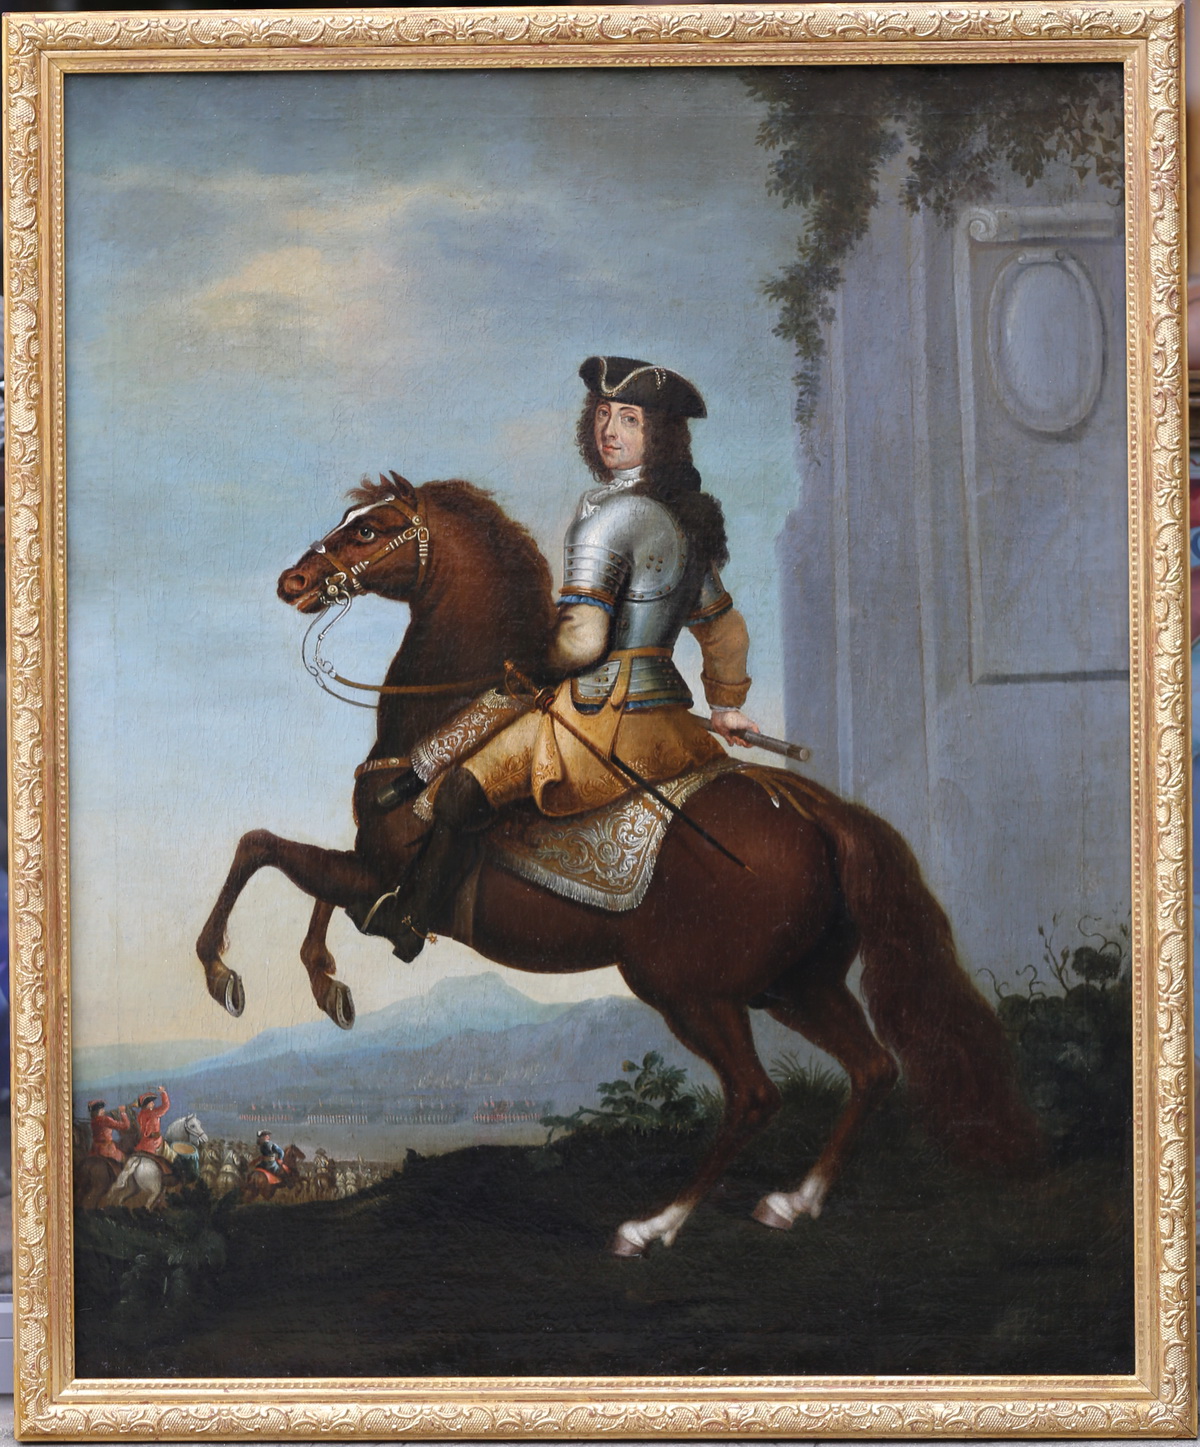 Adam Frans van der MEULEN 1632-1690 awarded